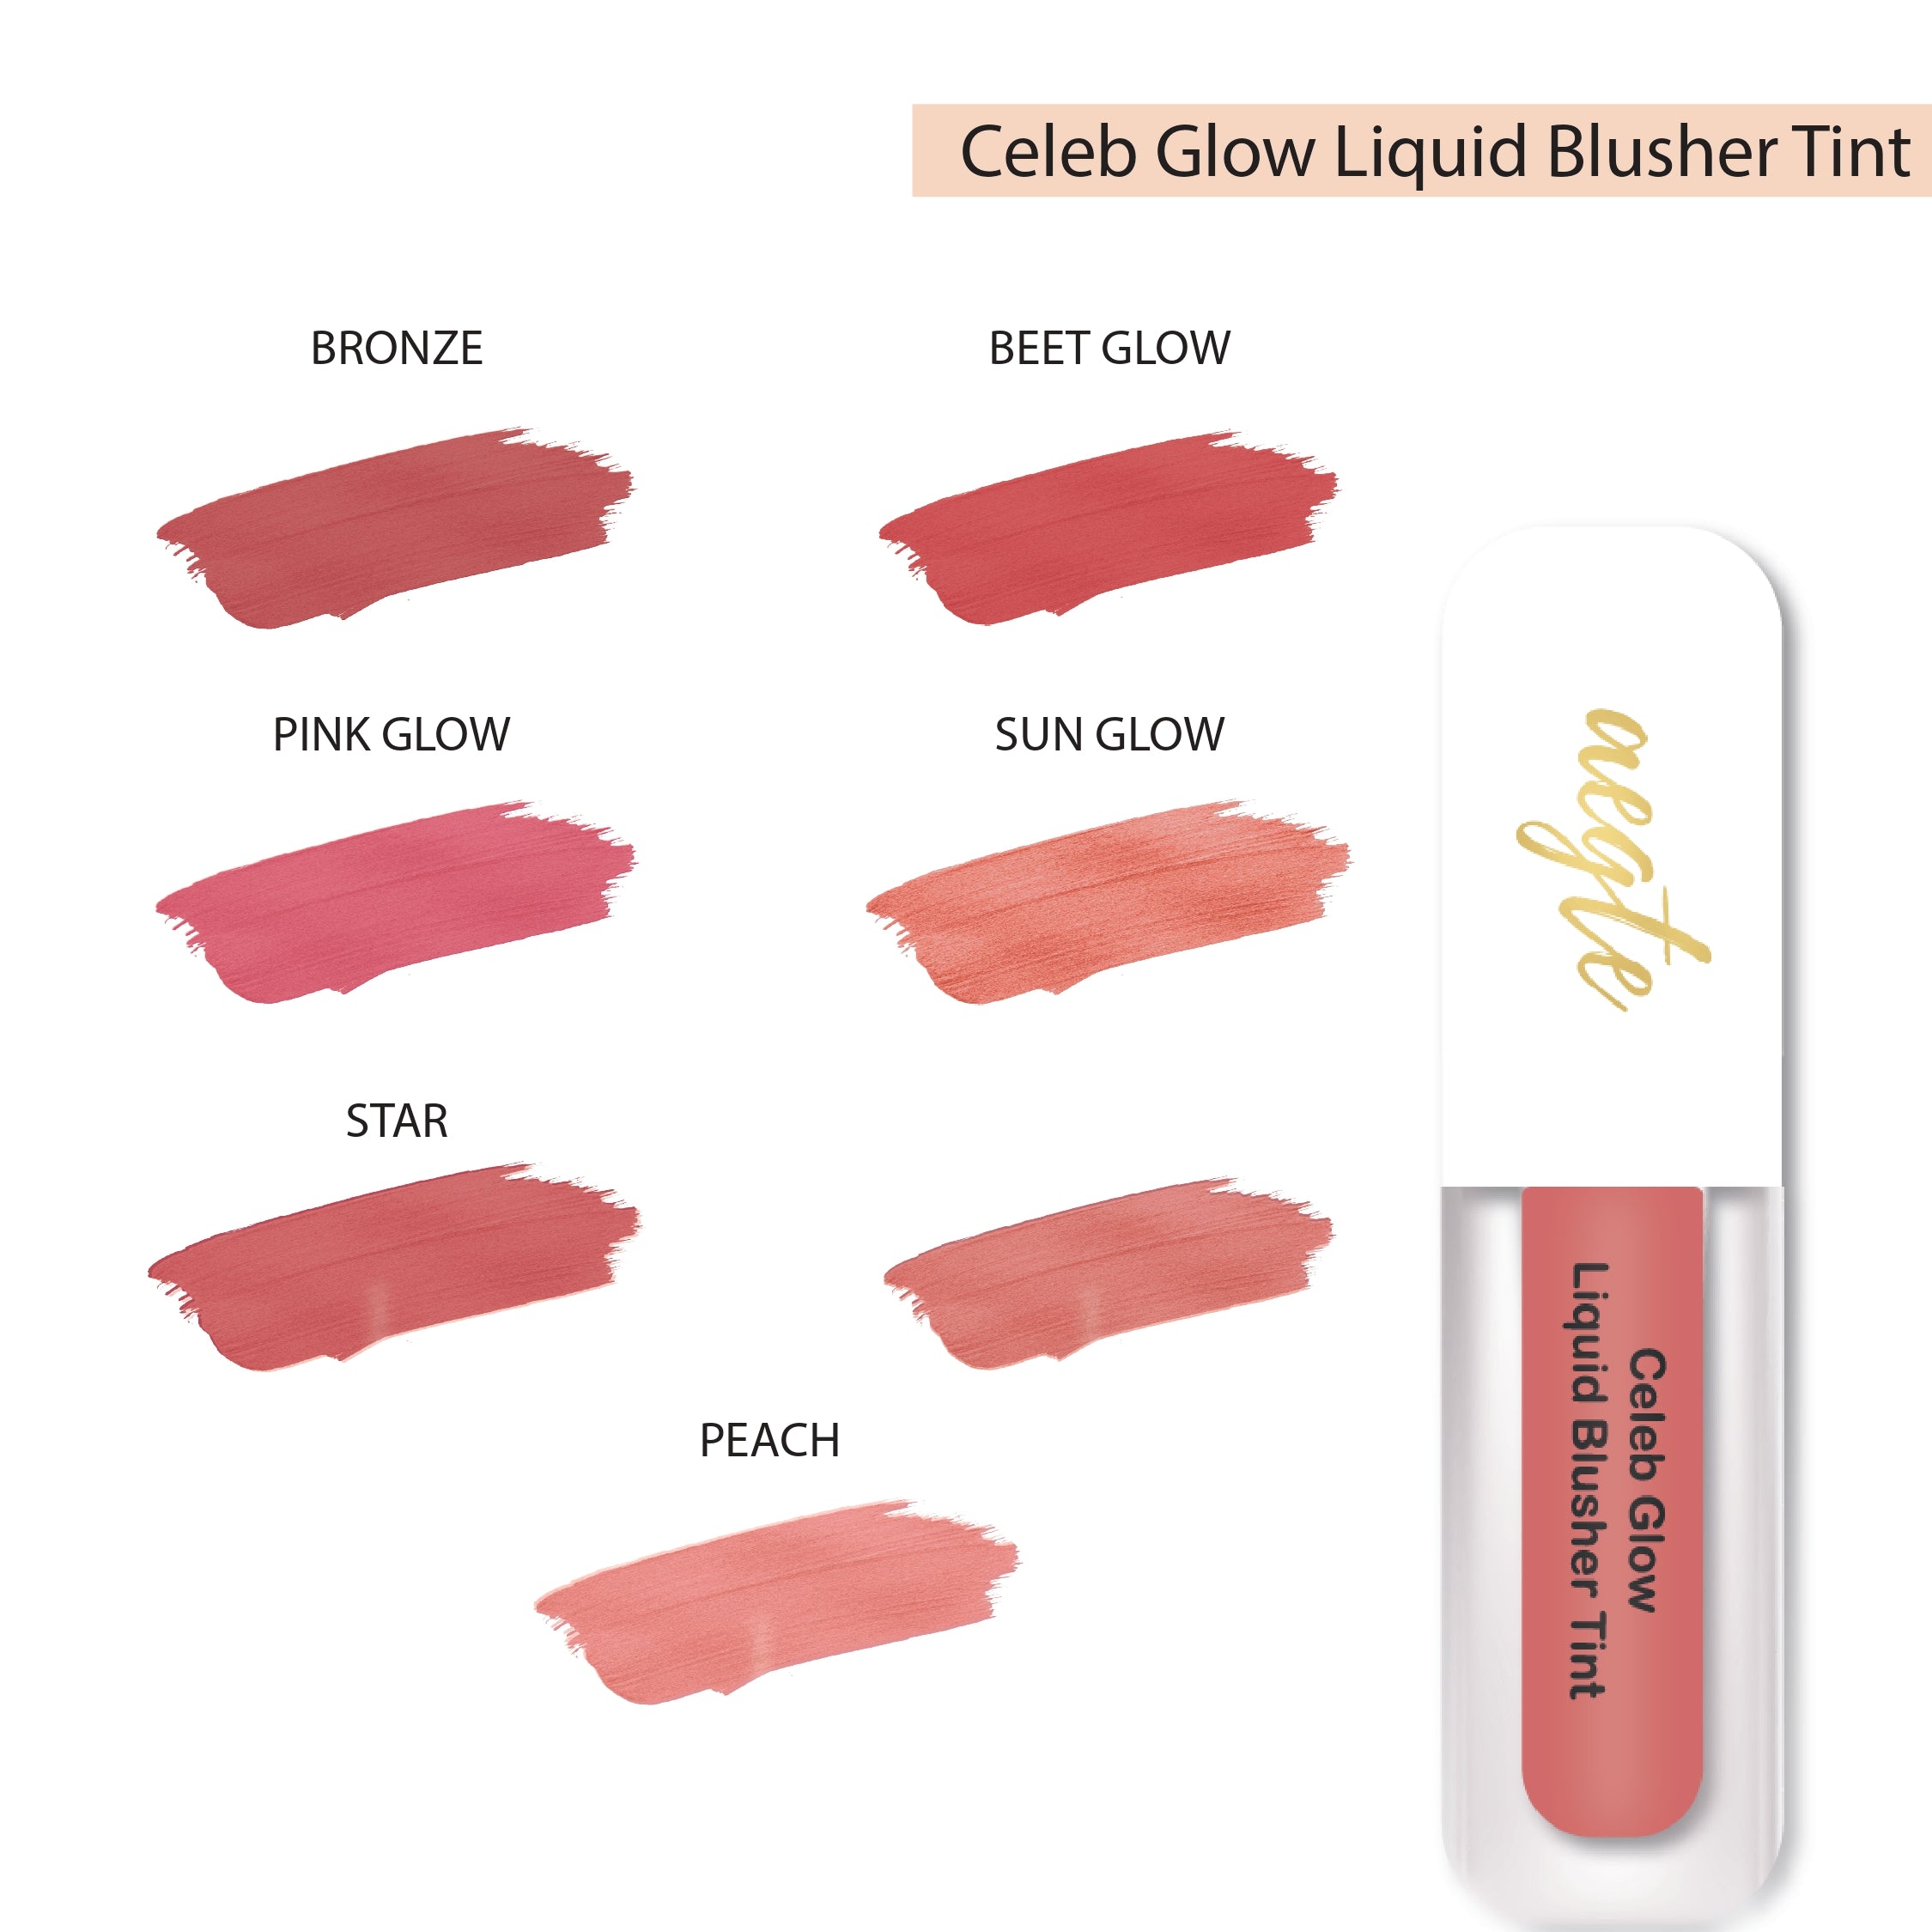 Aegte Skin Filter High Coverage Concealer + Glass Skin HD Foundation + Celeb Glow Liquid Blusher Tint + HD 24hr Stay Kajal